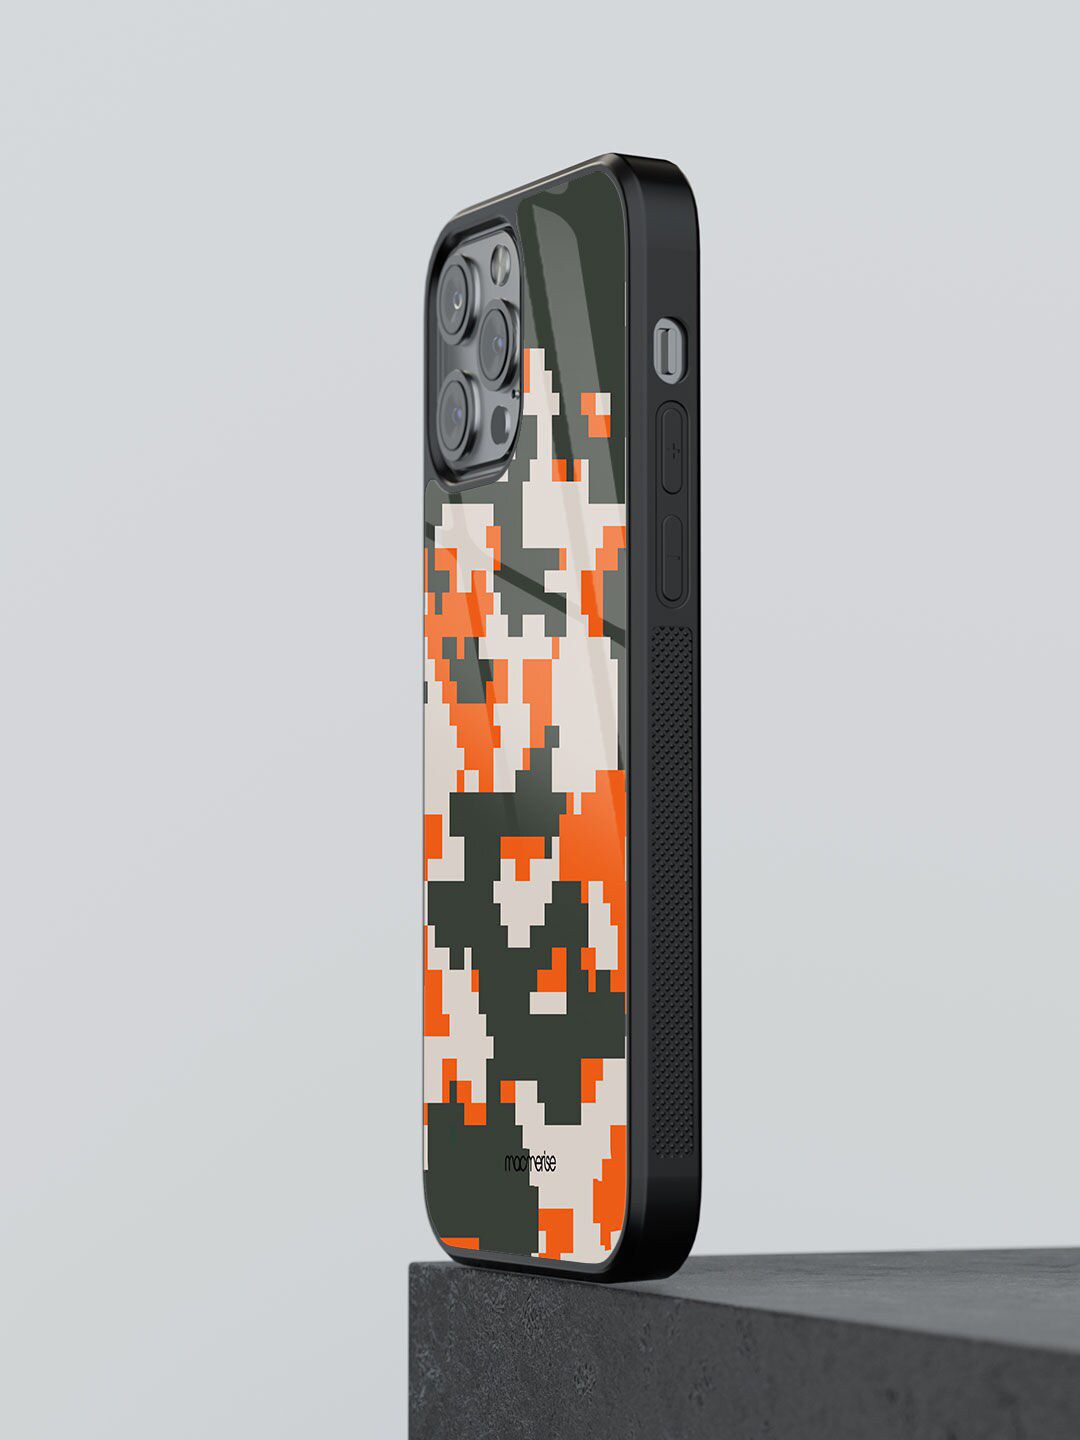 macmerise Black & Orange Printed Camo Pixel Glass iPhone 12 Pro Max Back Case Price in India